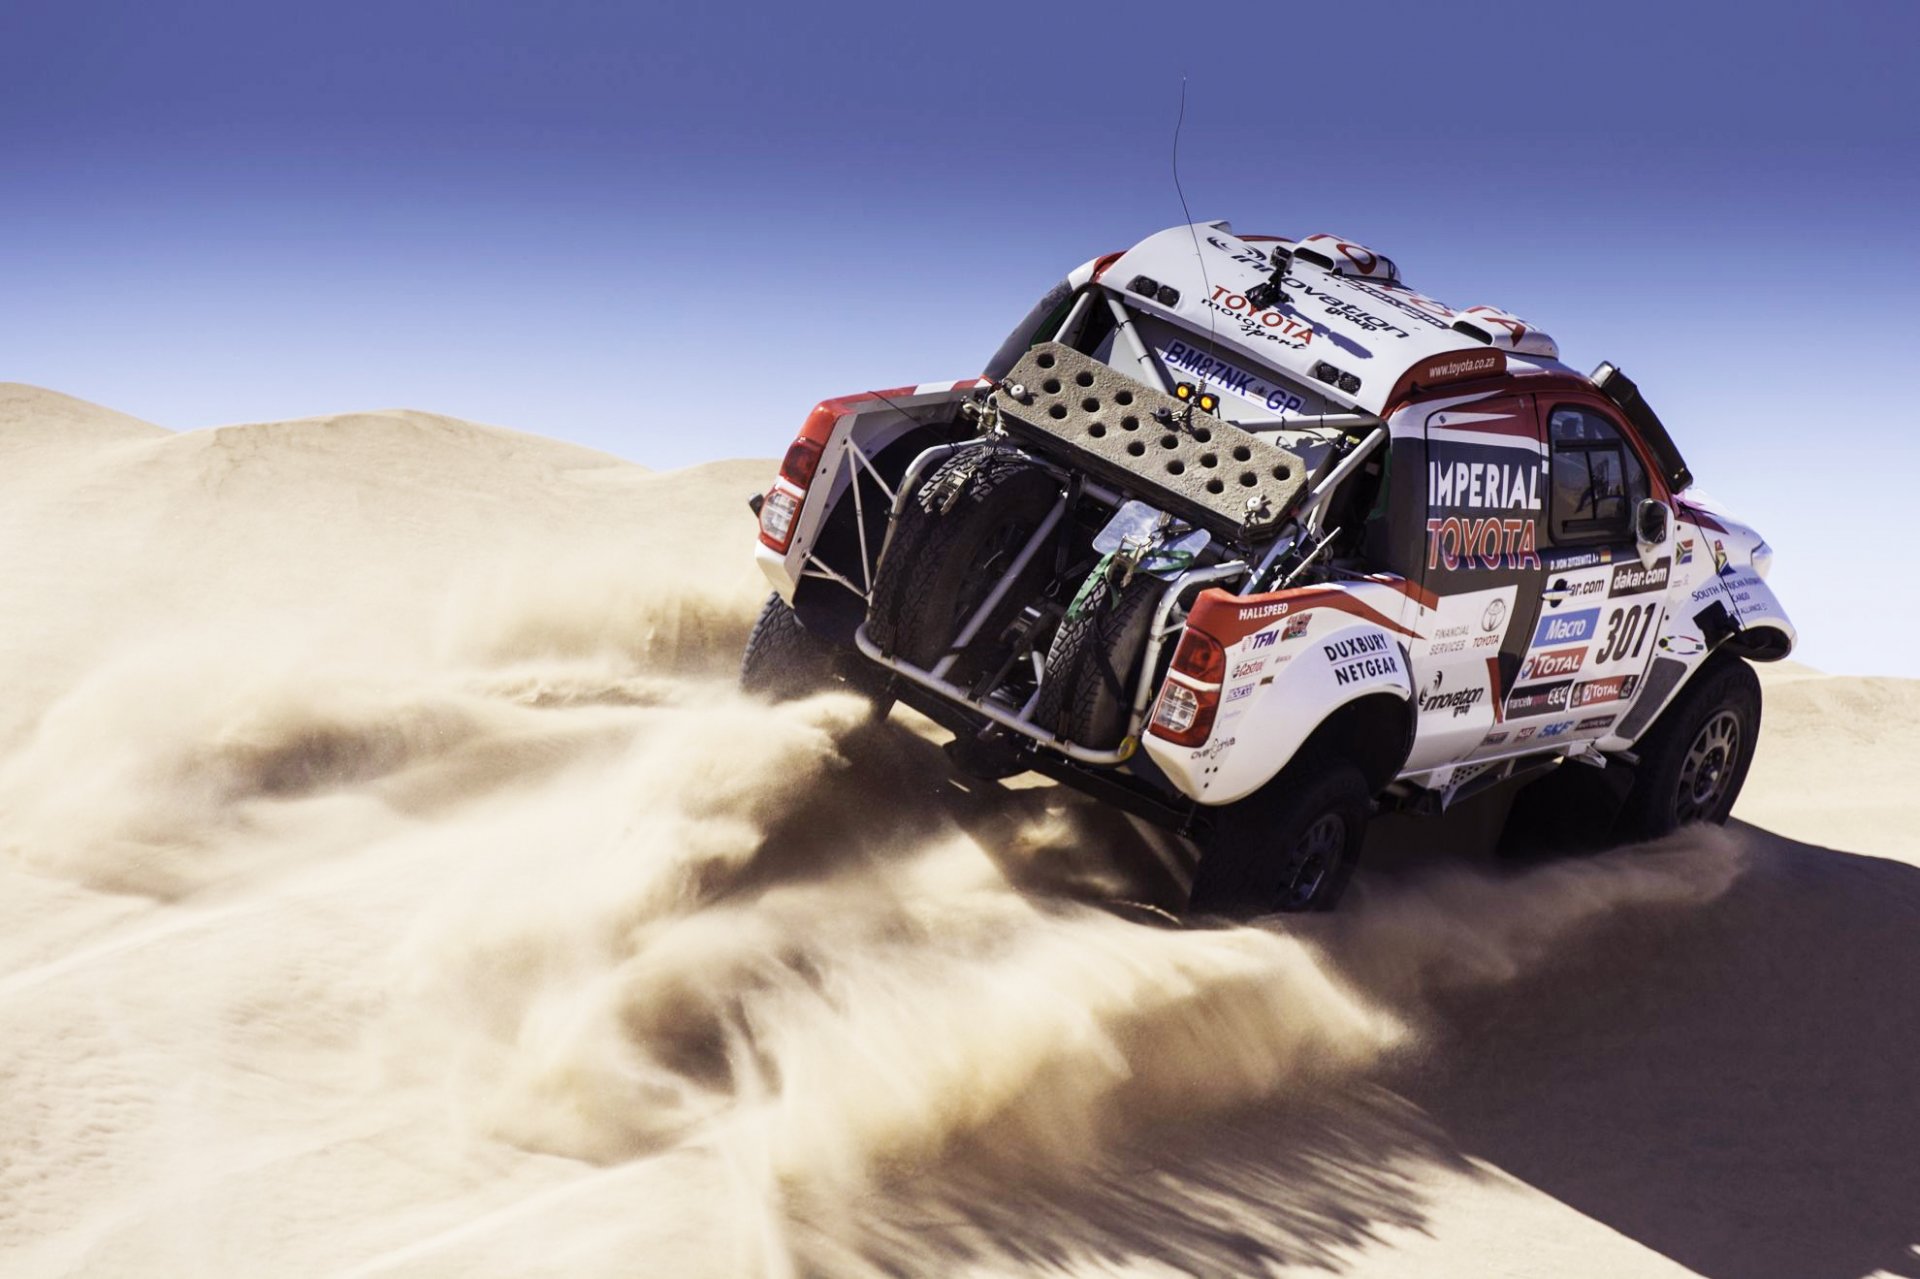 toyota авто внедорожник дакар митинг ралли скорость гонка спорт песок дюна 2014 белый машина